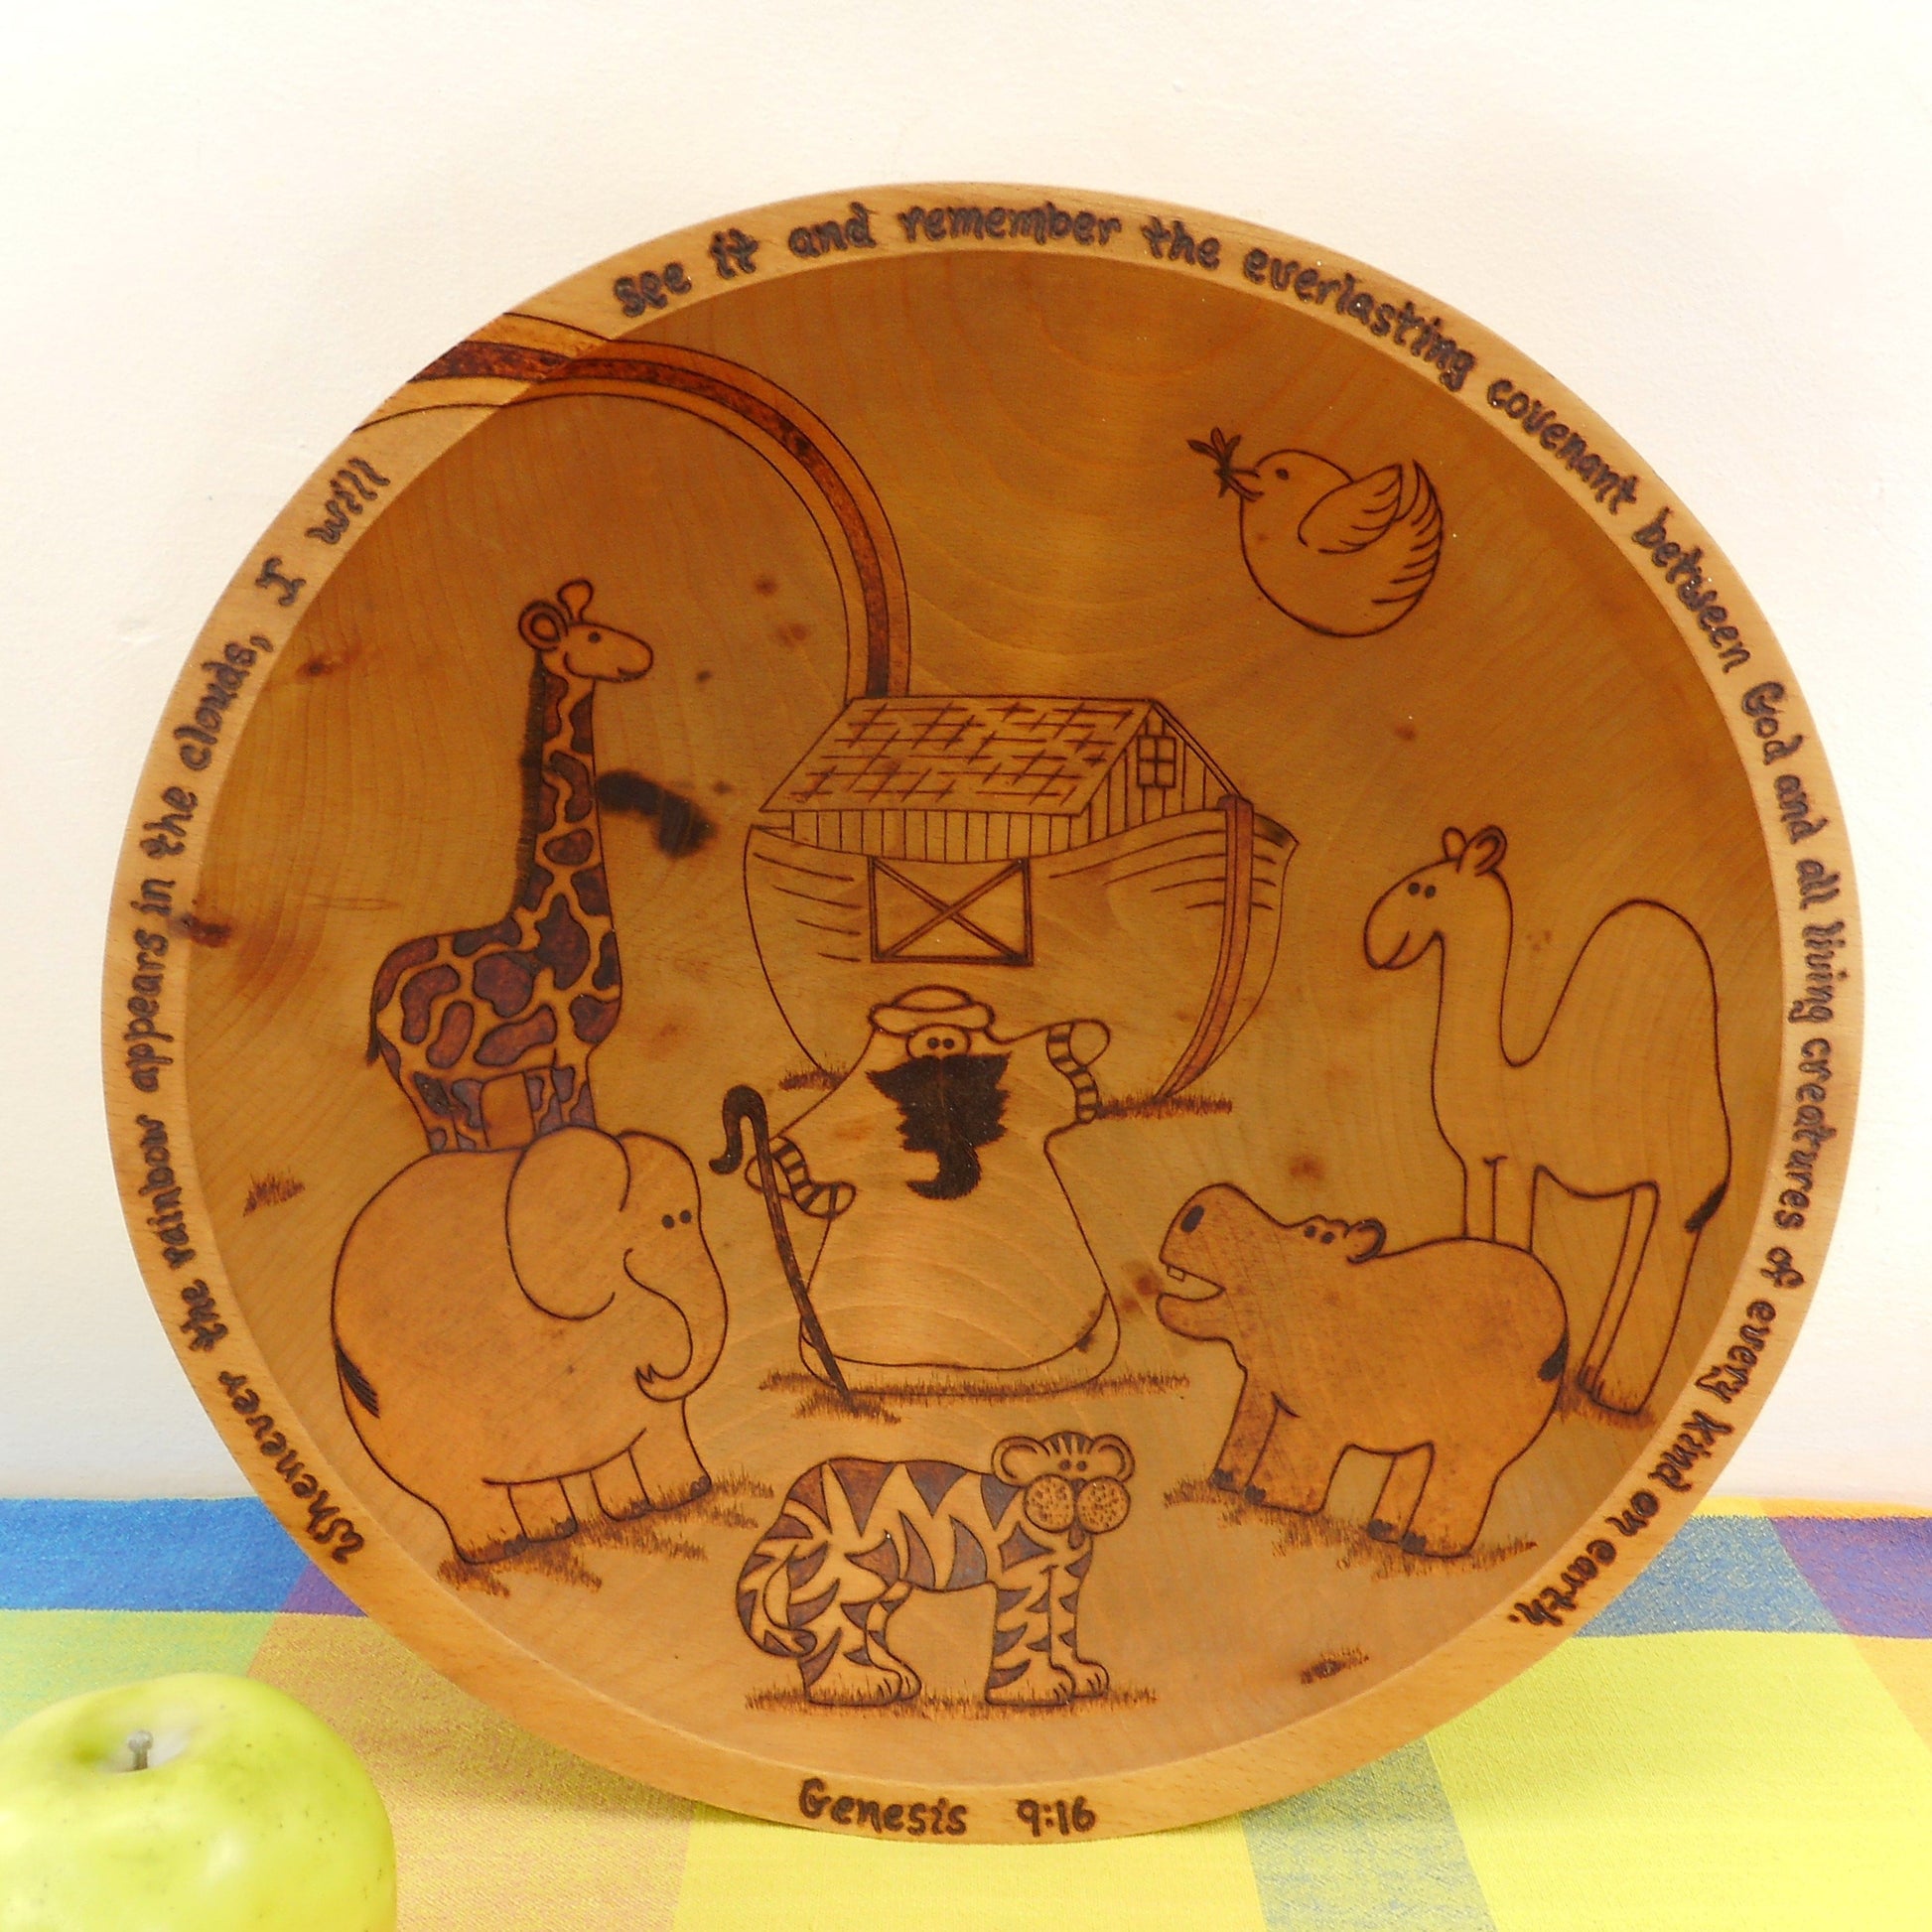 DW Delach Signed Pyrography Maple Wood Dough Bowl - Genesis 9:16 Noah's Ark